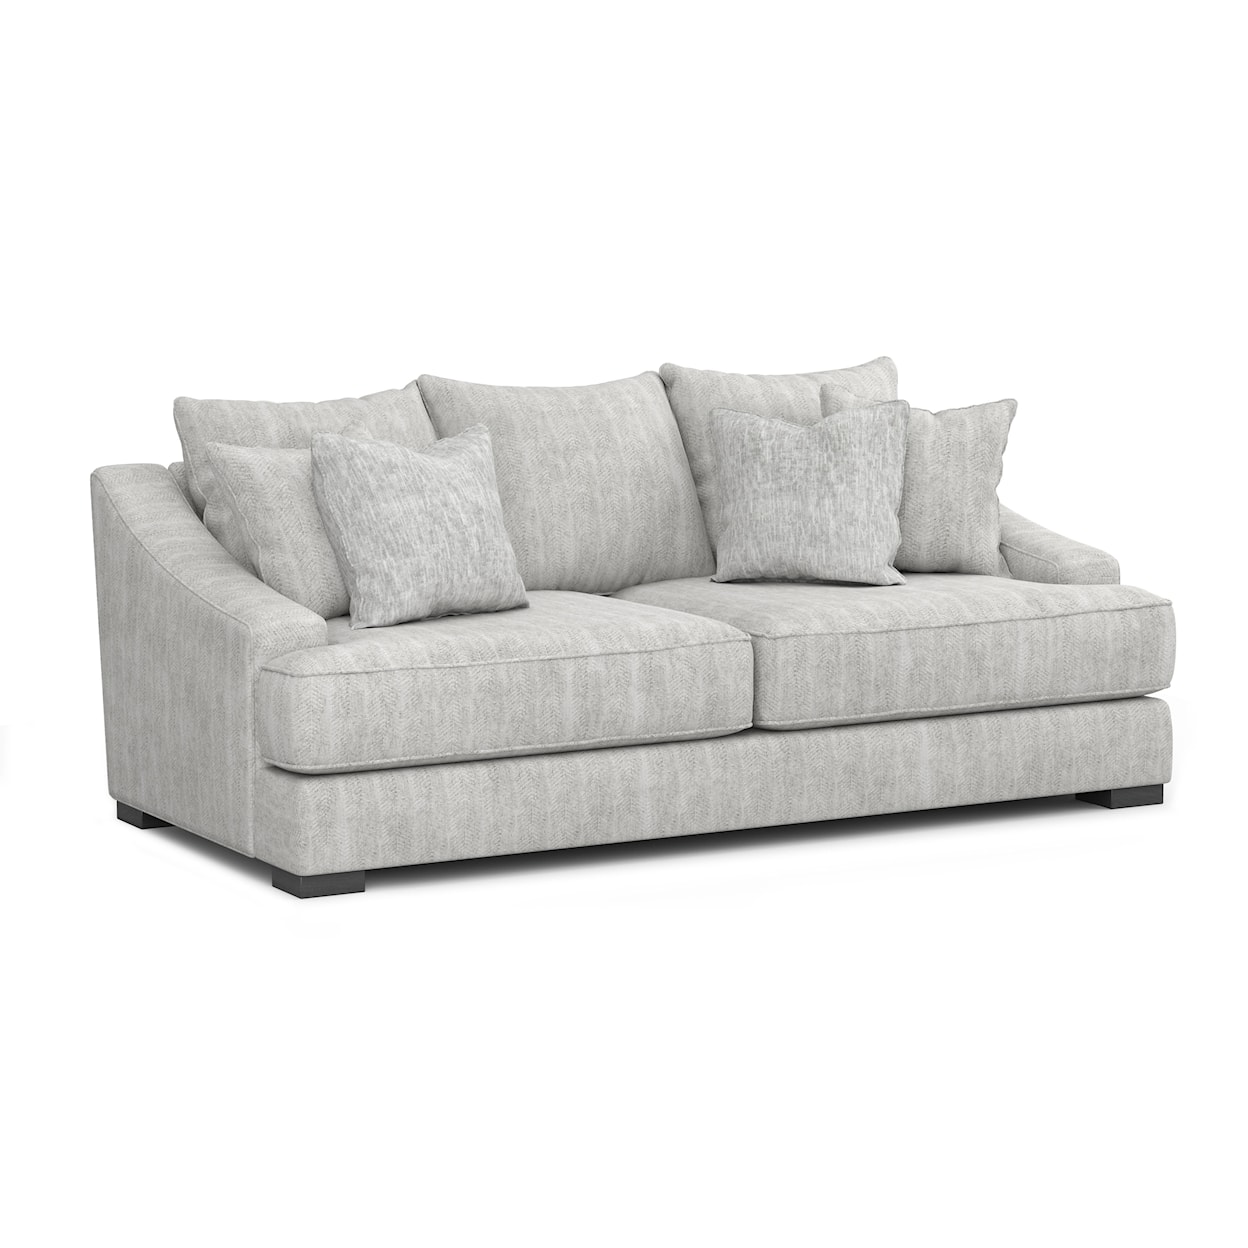 Stanton 376 Sofa